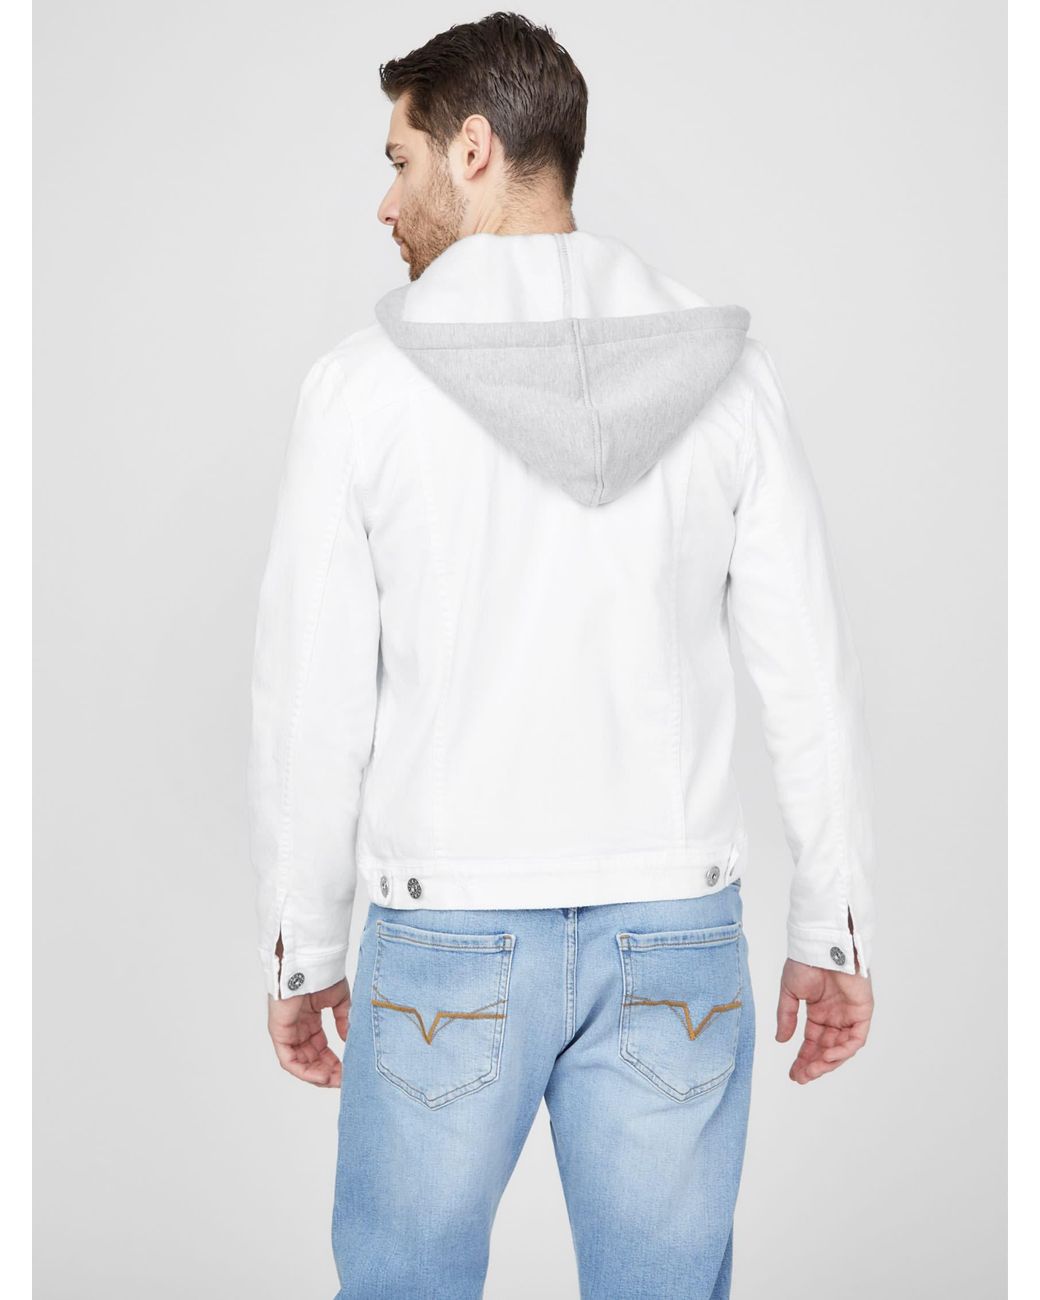 Guess Factory Morrison Denim Jacket in White for Men | Lyst